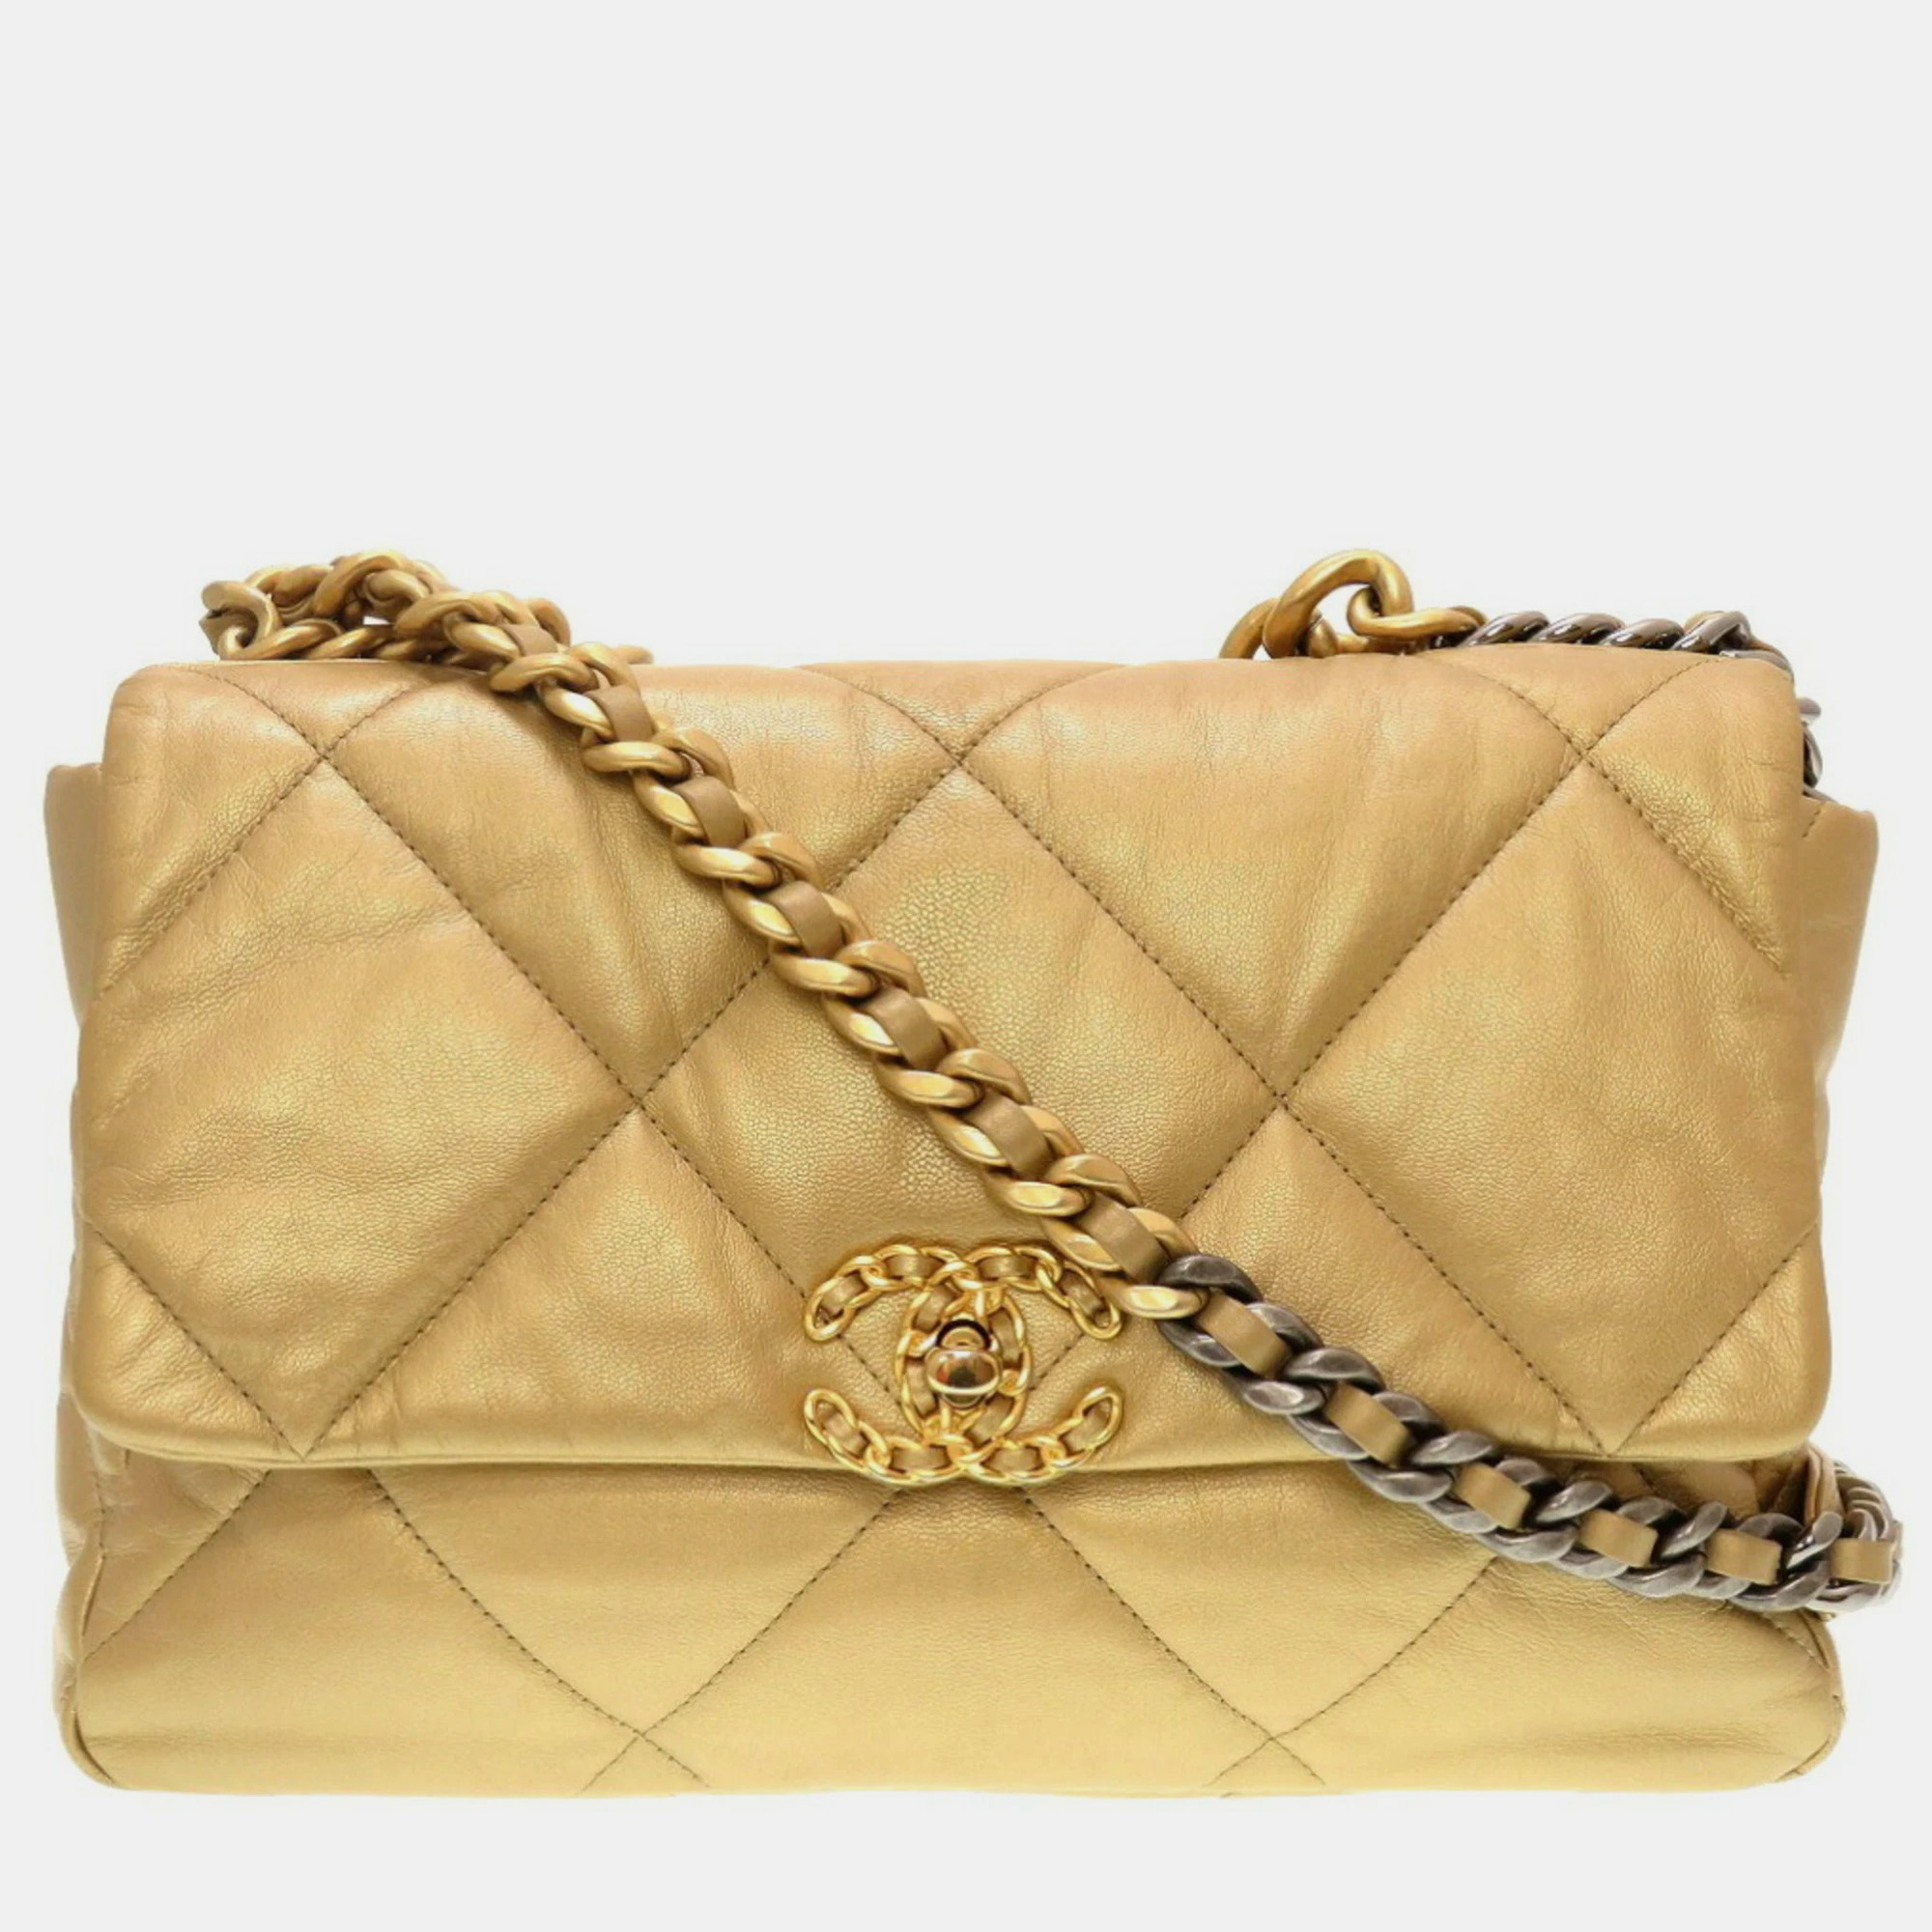 Chanel gold leather medium 19 shoulder bags